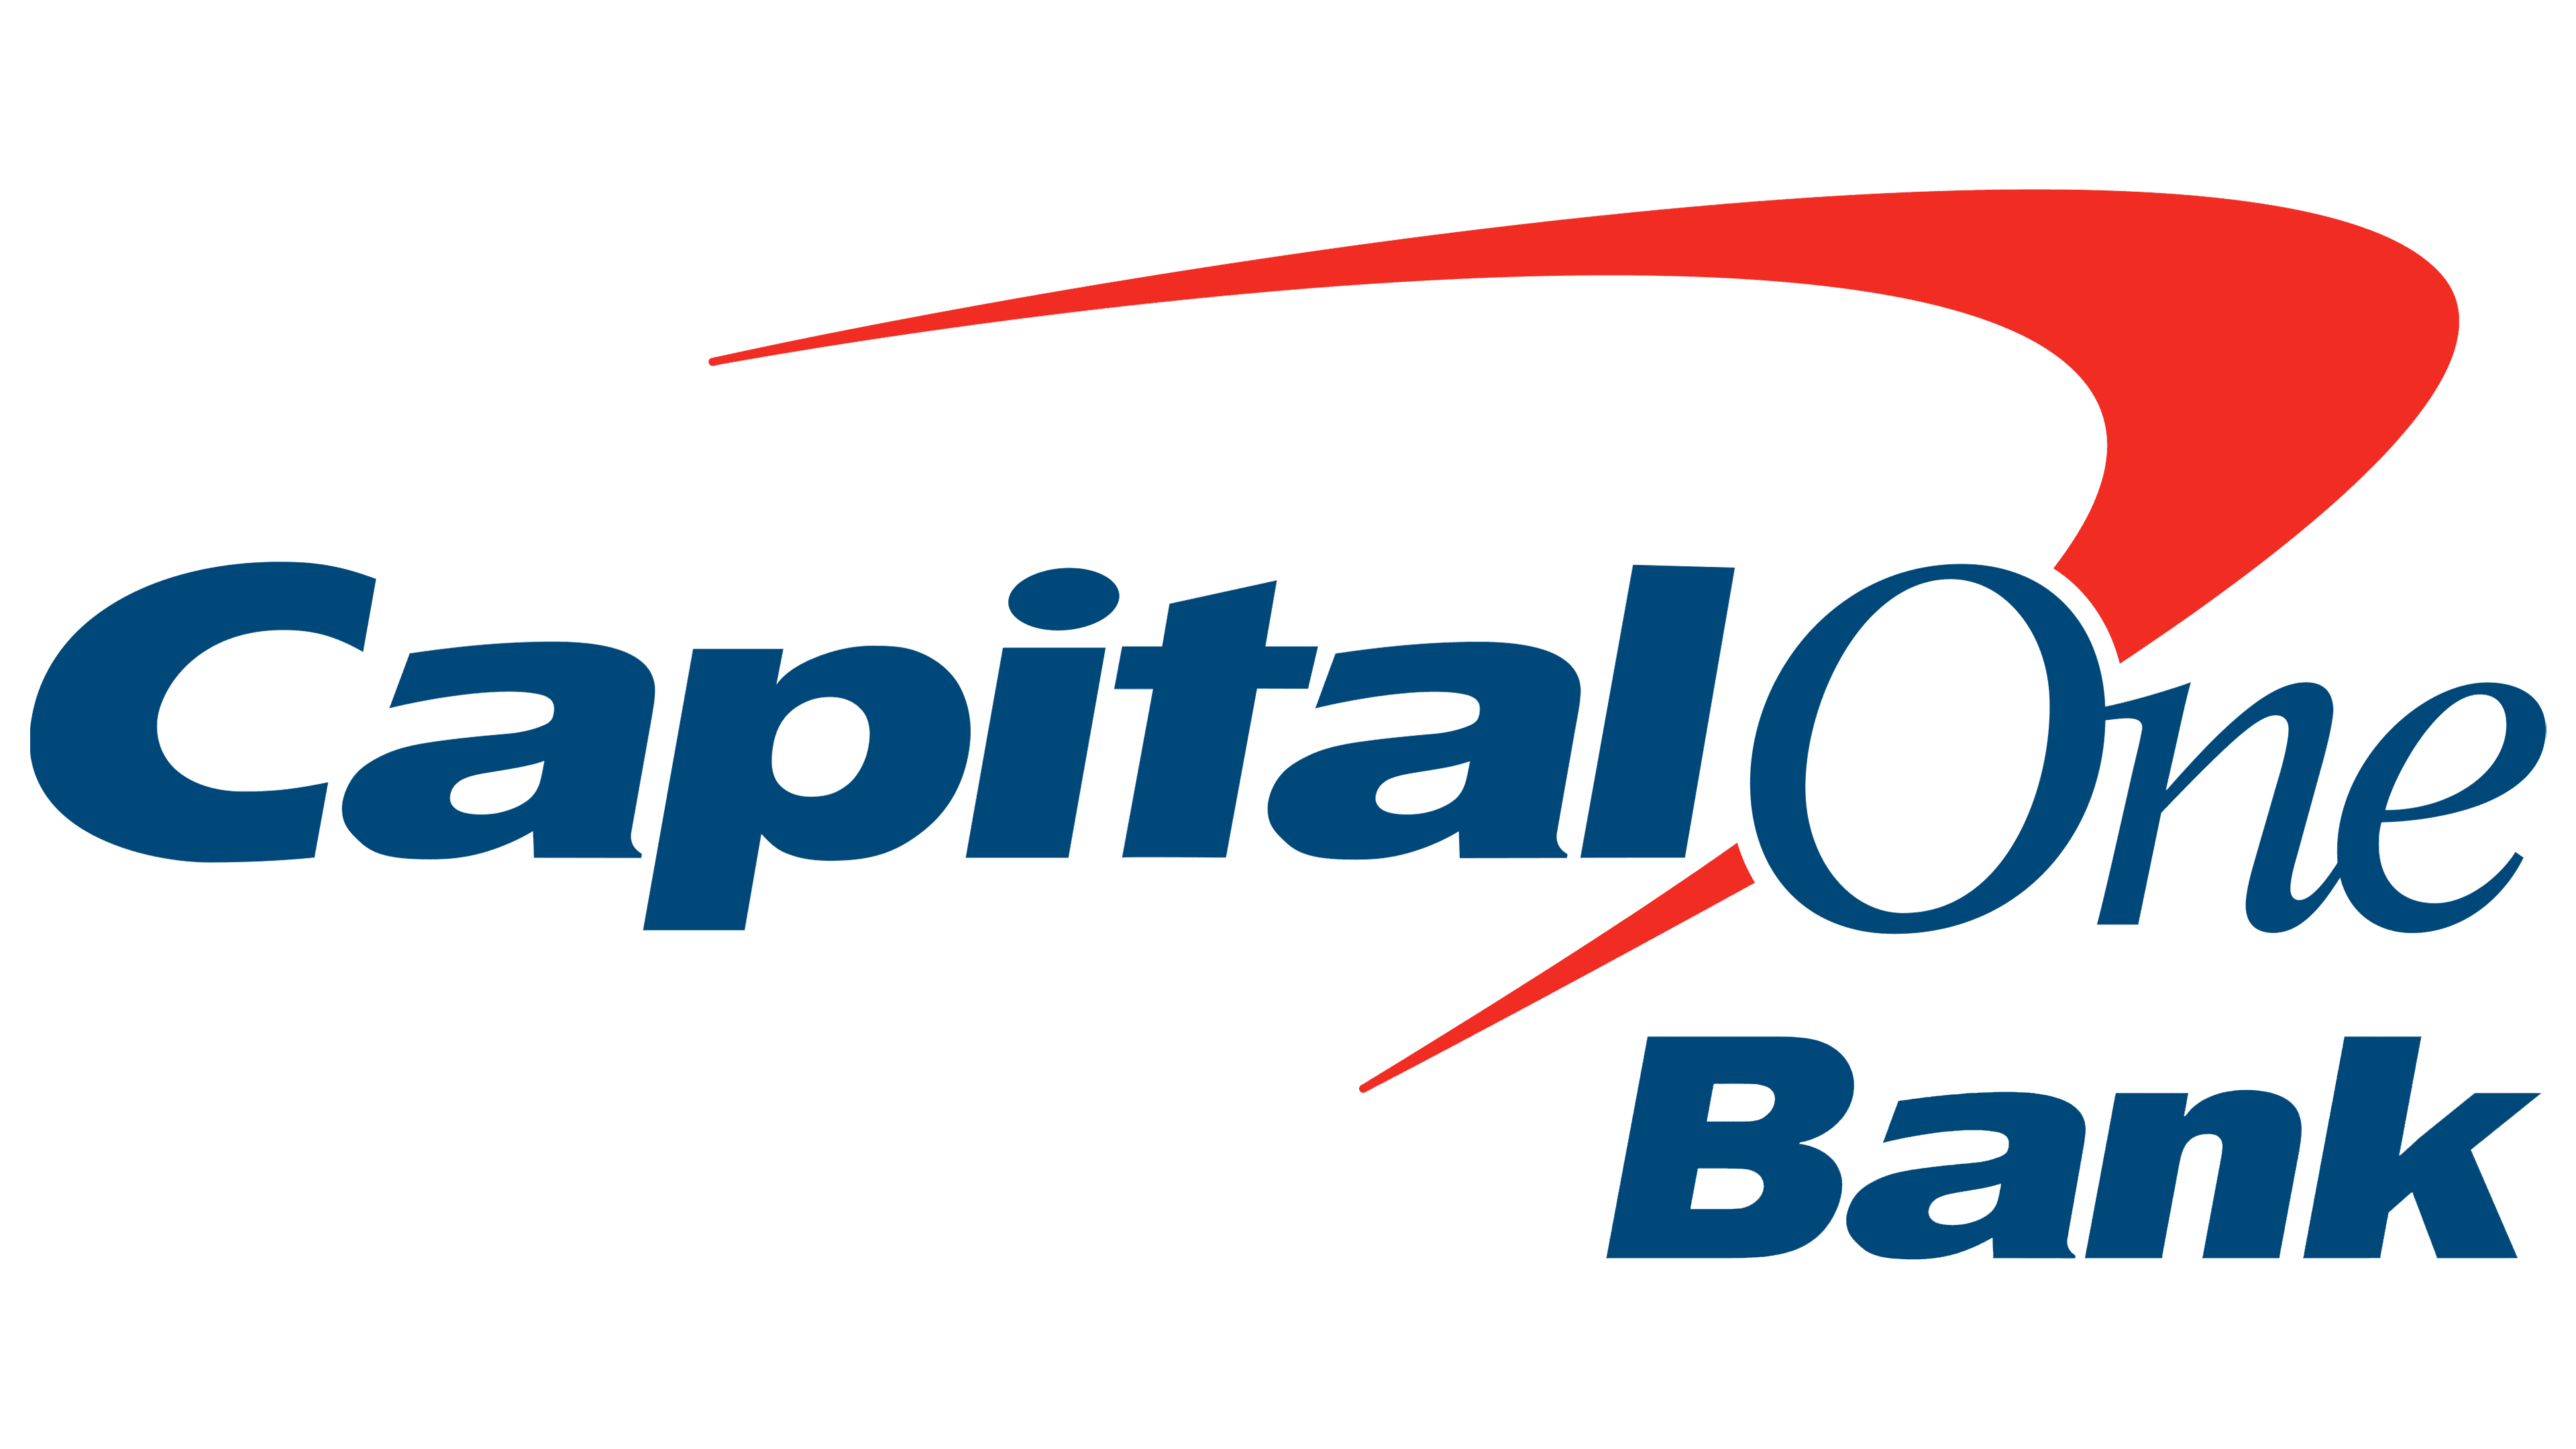 Capital One Logo | Symbol, History, PNG (3840*2160)